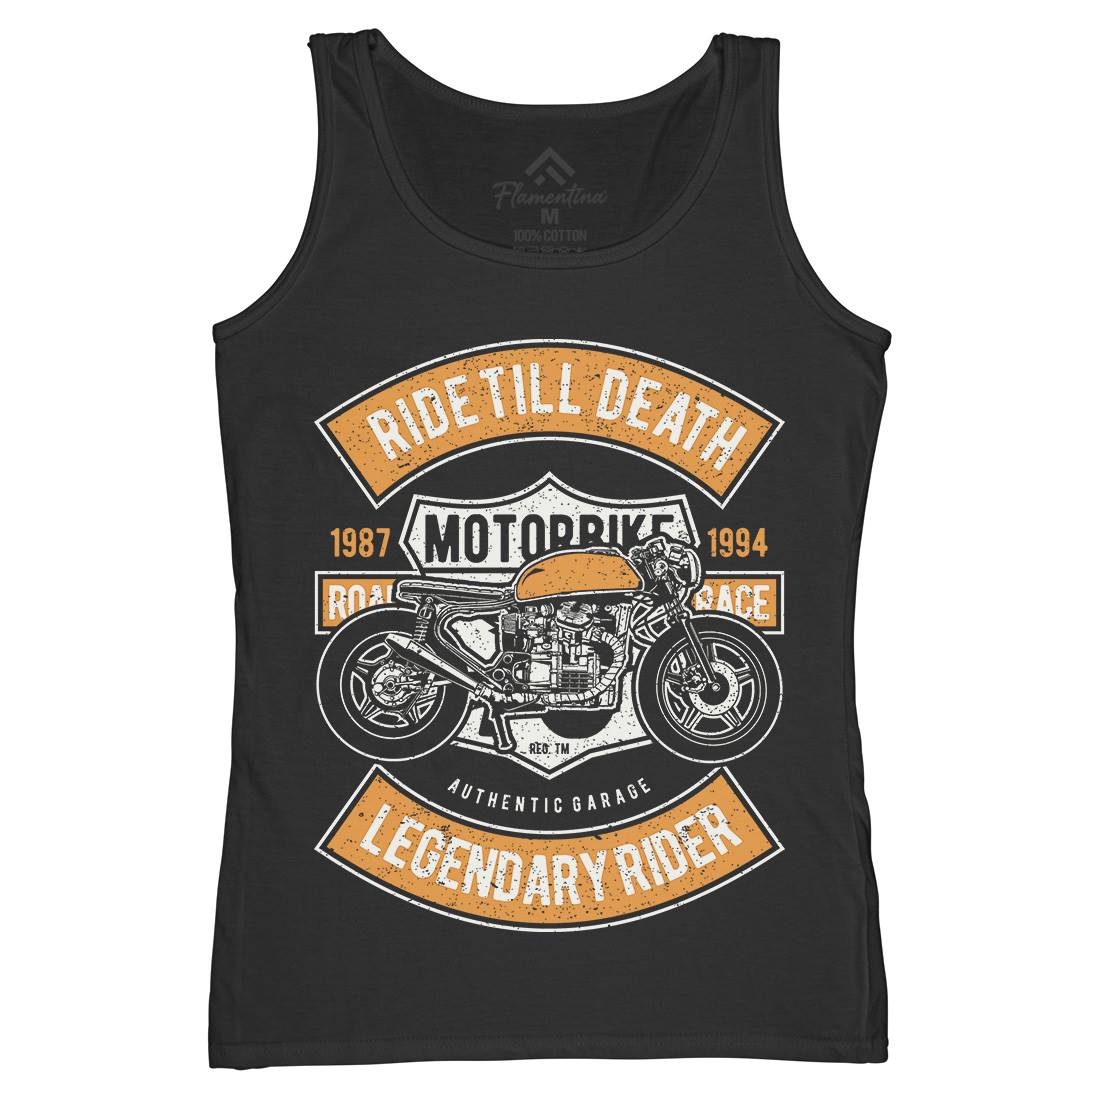 Ride Till Death Womens Organic Tank Top Vest Motorcycles A743